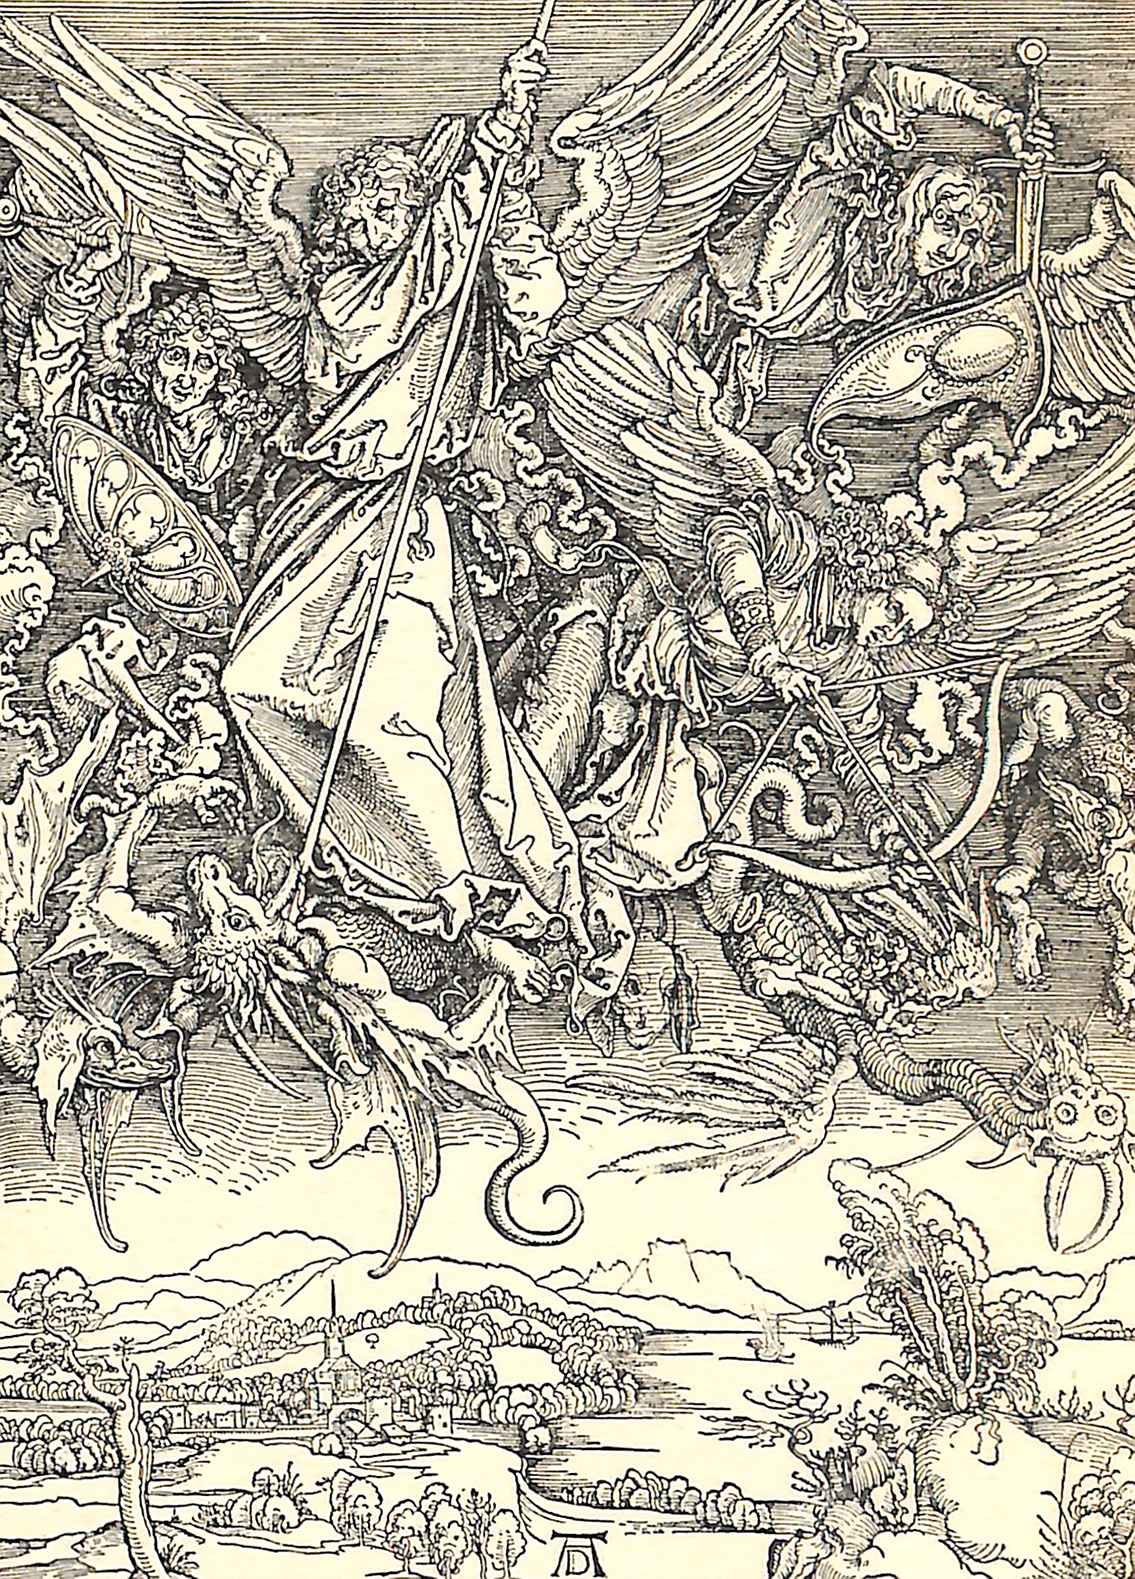 The Apocalypse, St. Michael fighting the Dragon